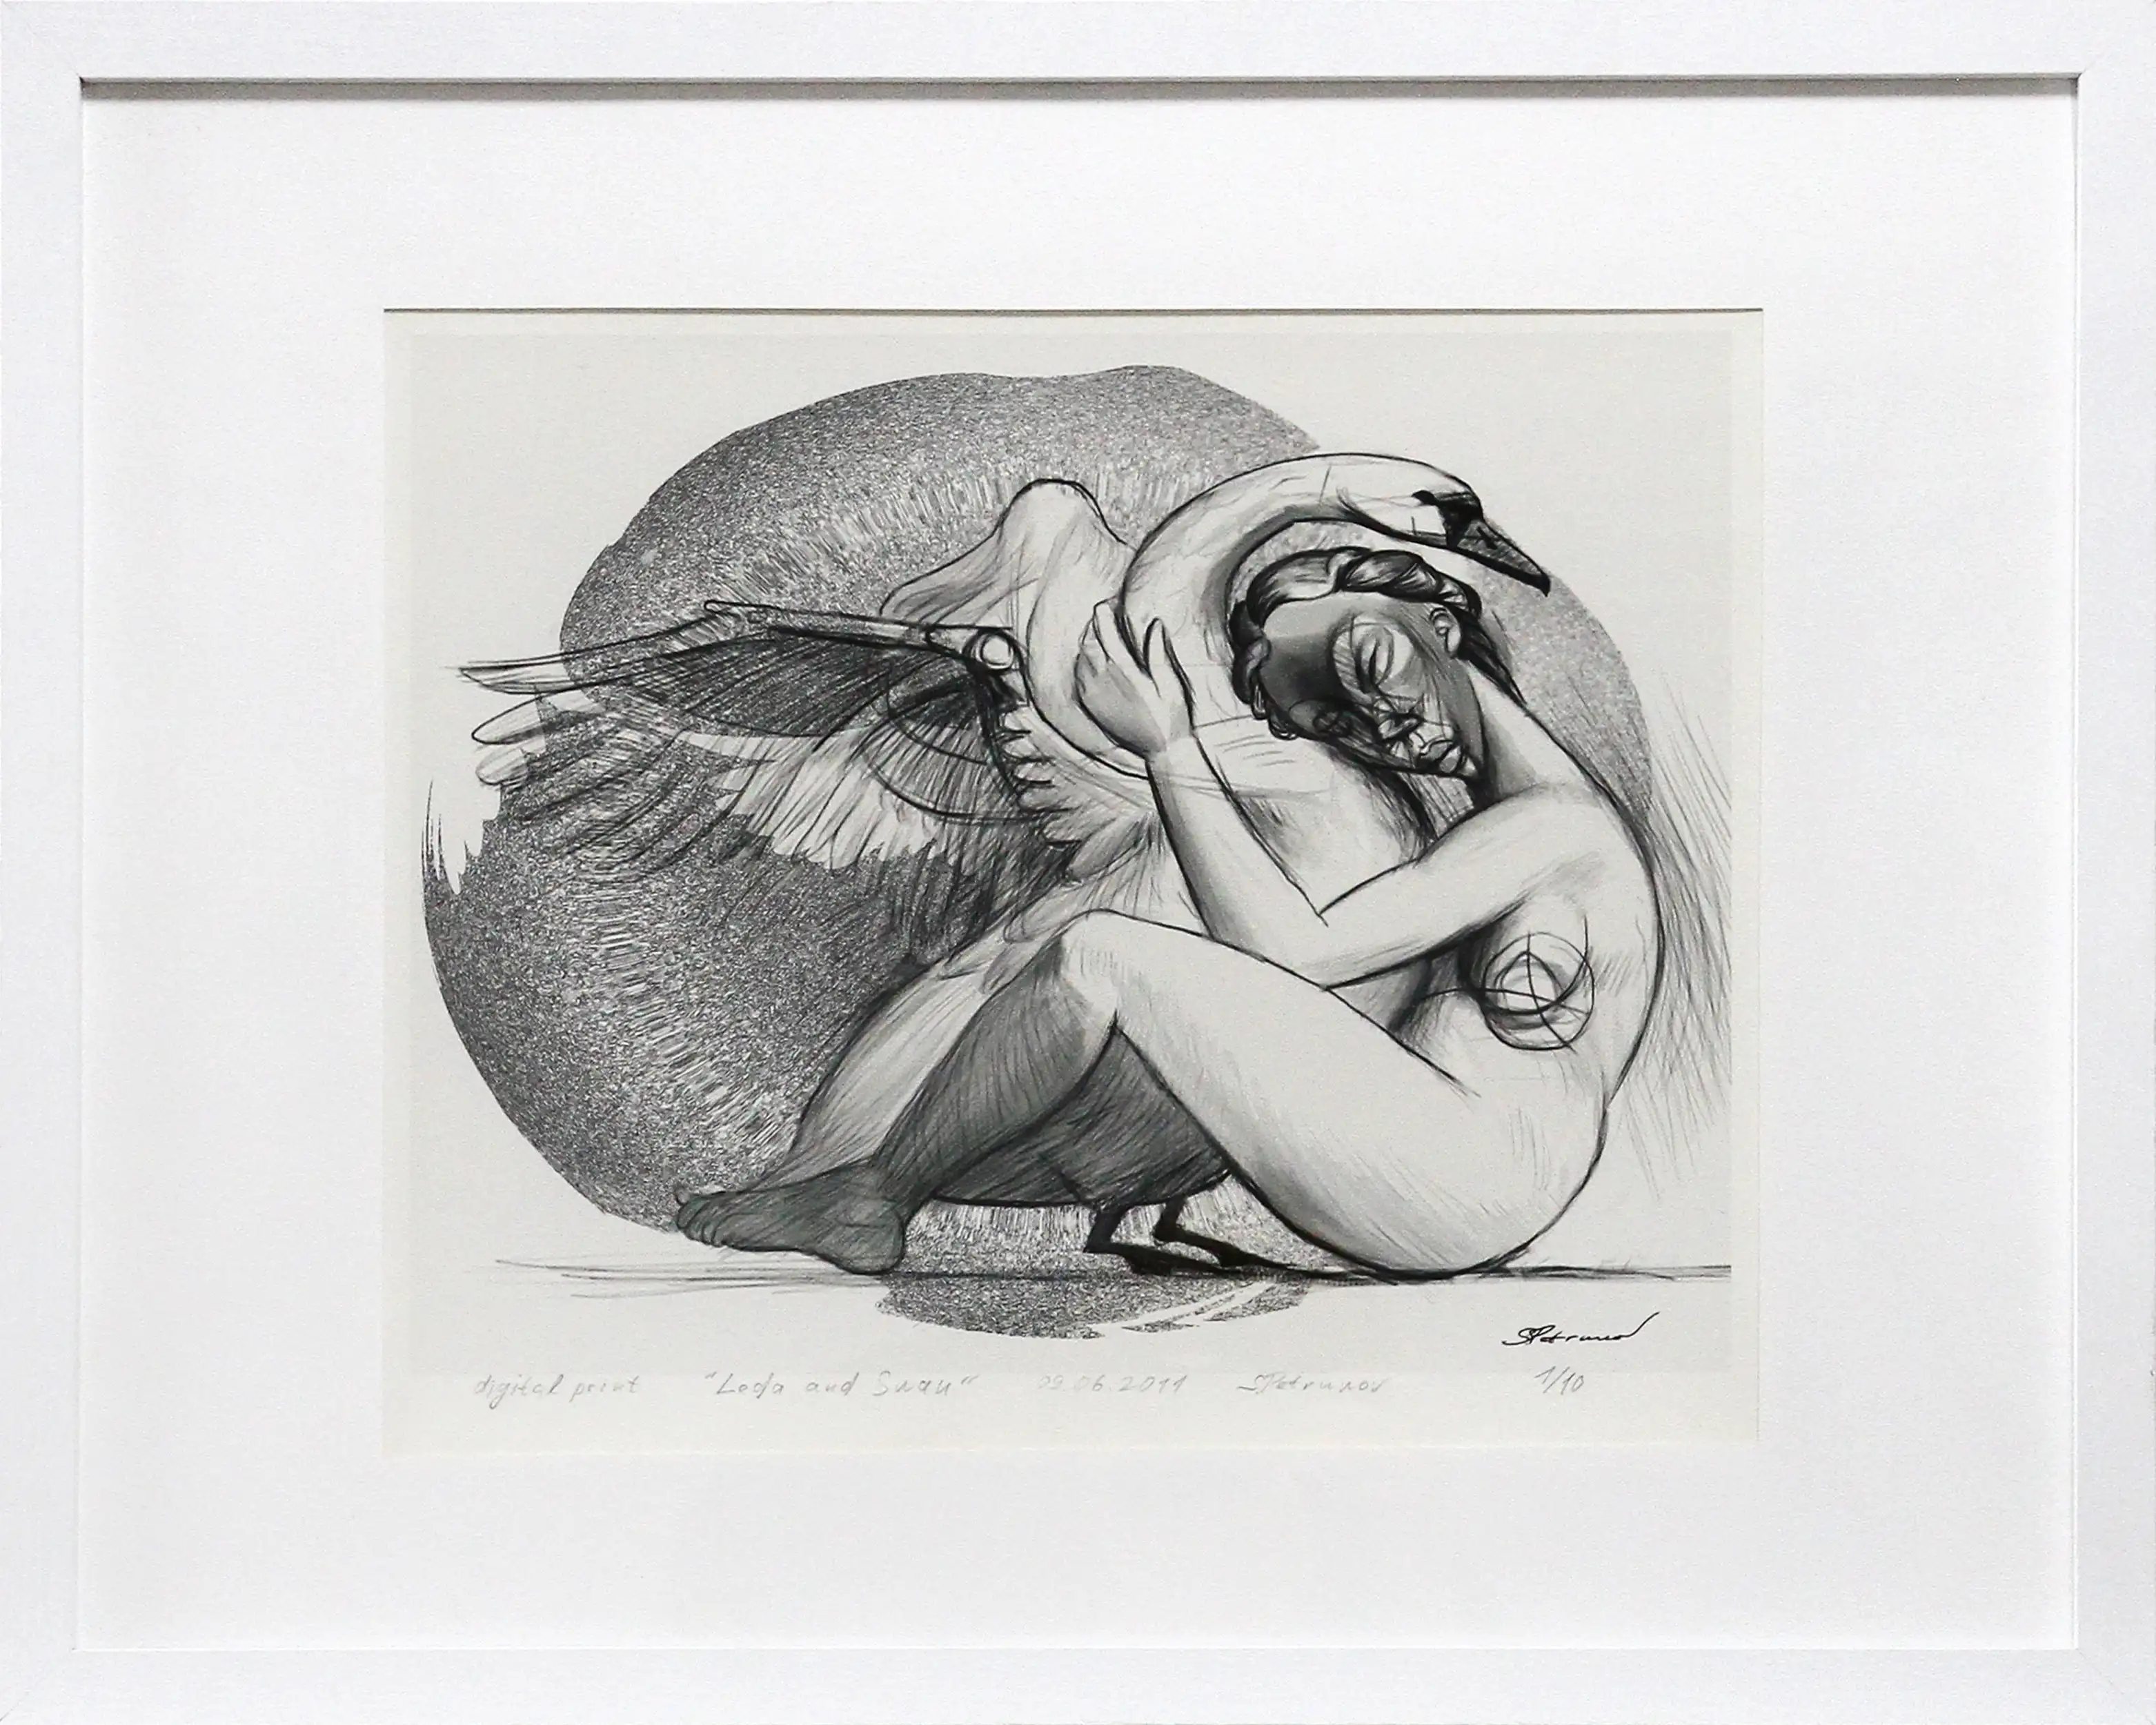 S. Petrunov: "Leda and the swan", limitierter Kunstdruck